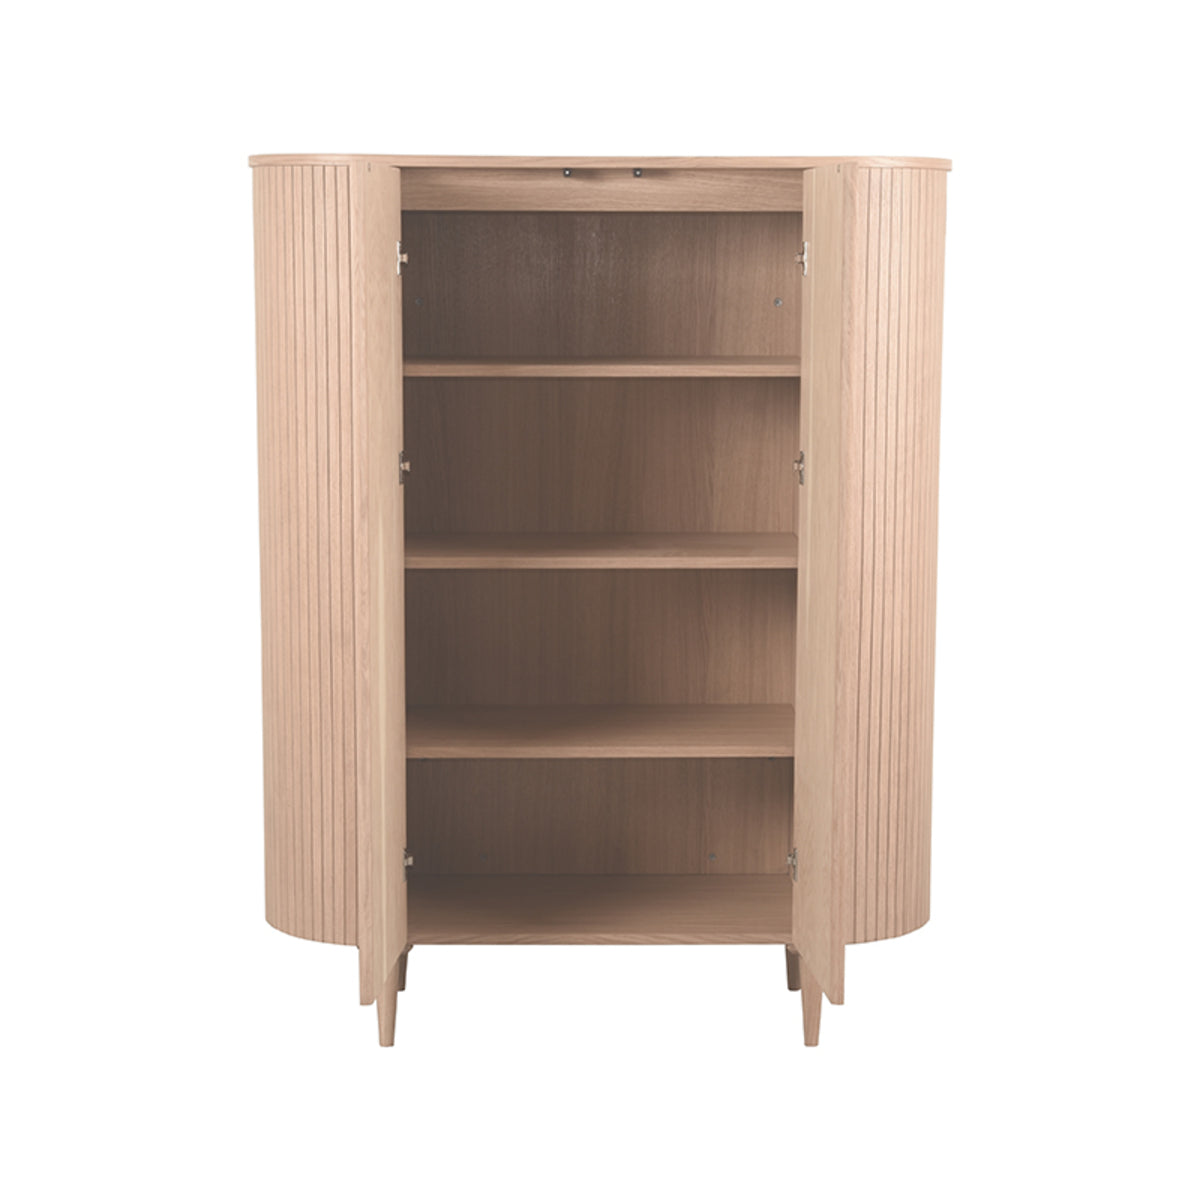 LABEL51 Storage cupboard Oliva - Natural - Oak - 125 cm